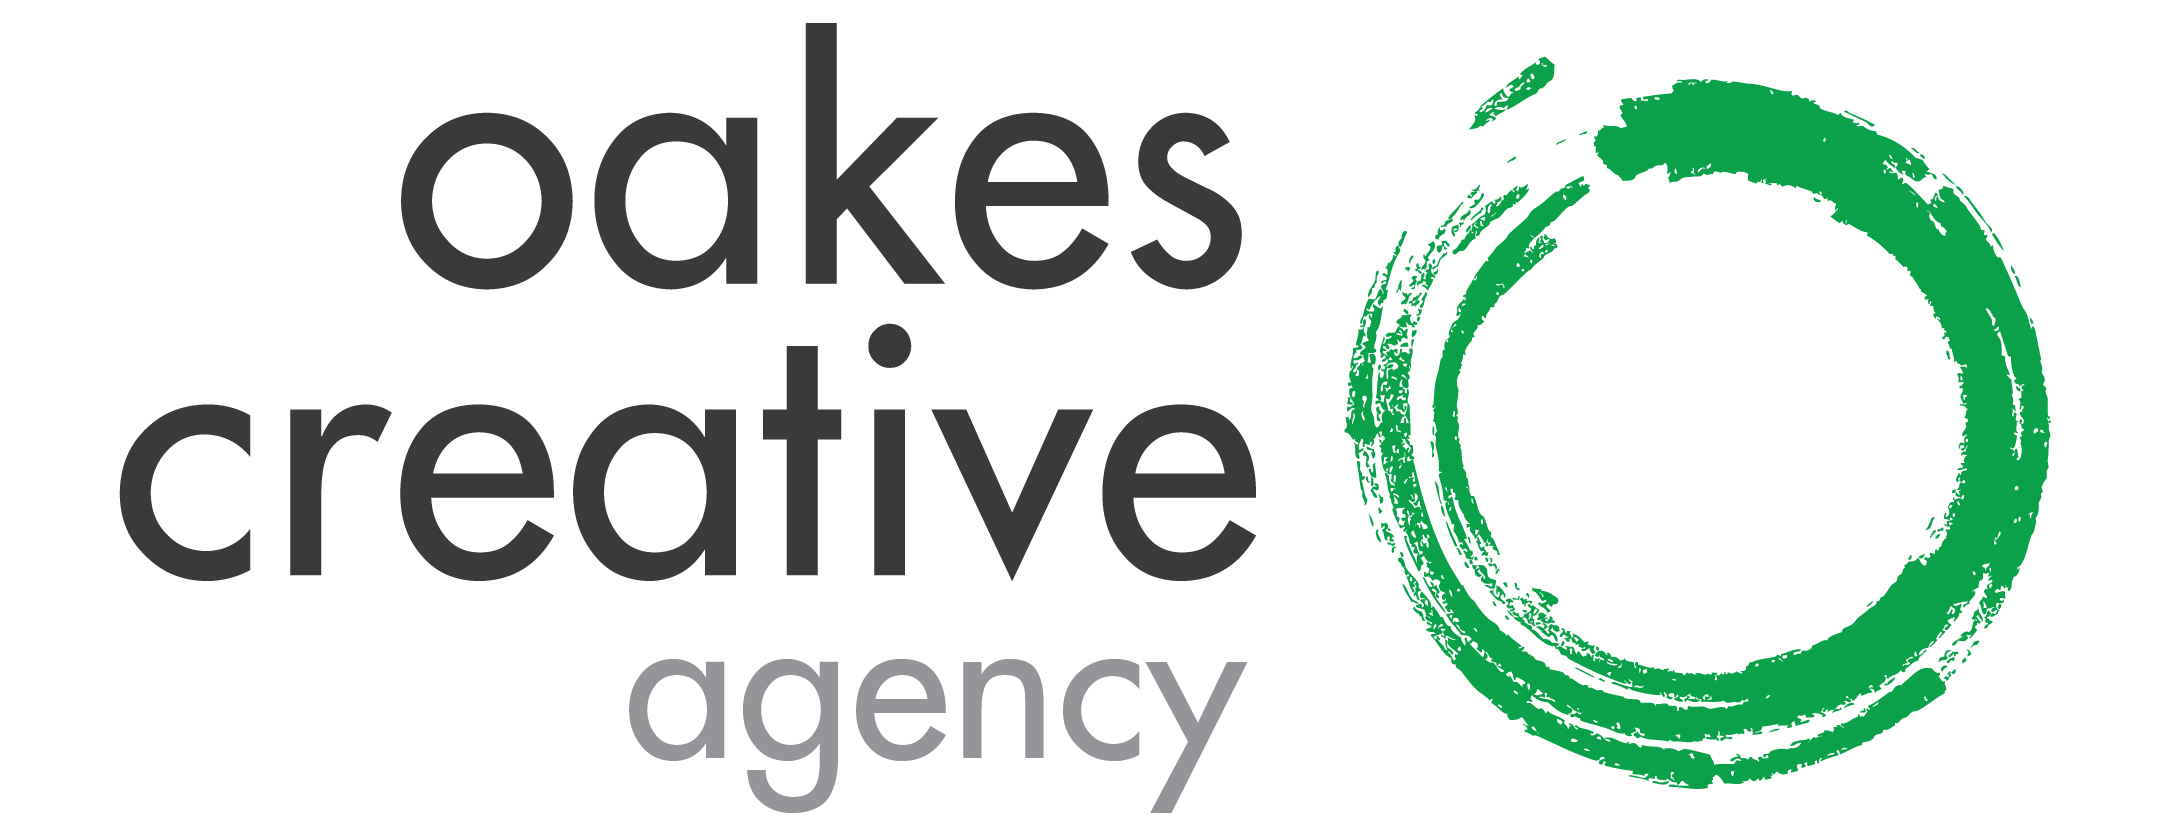 Oakes Creative Agency